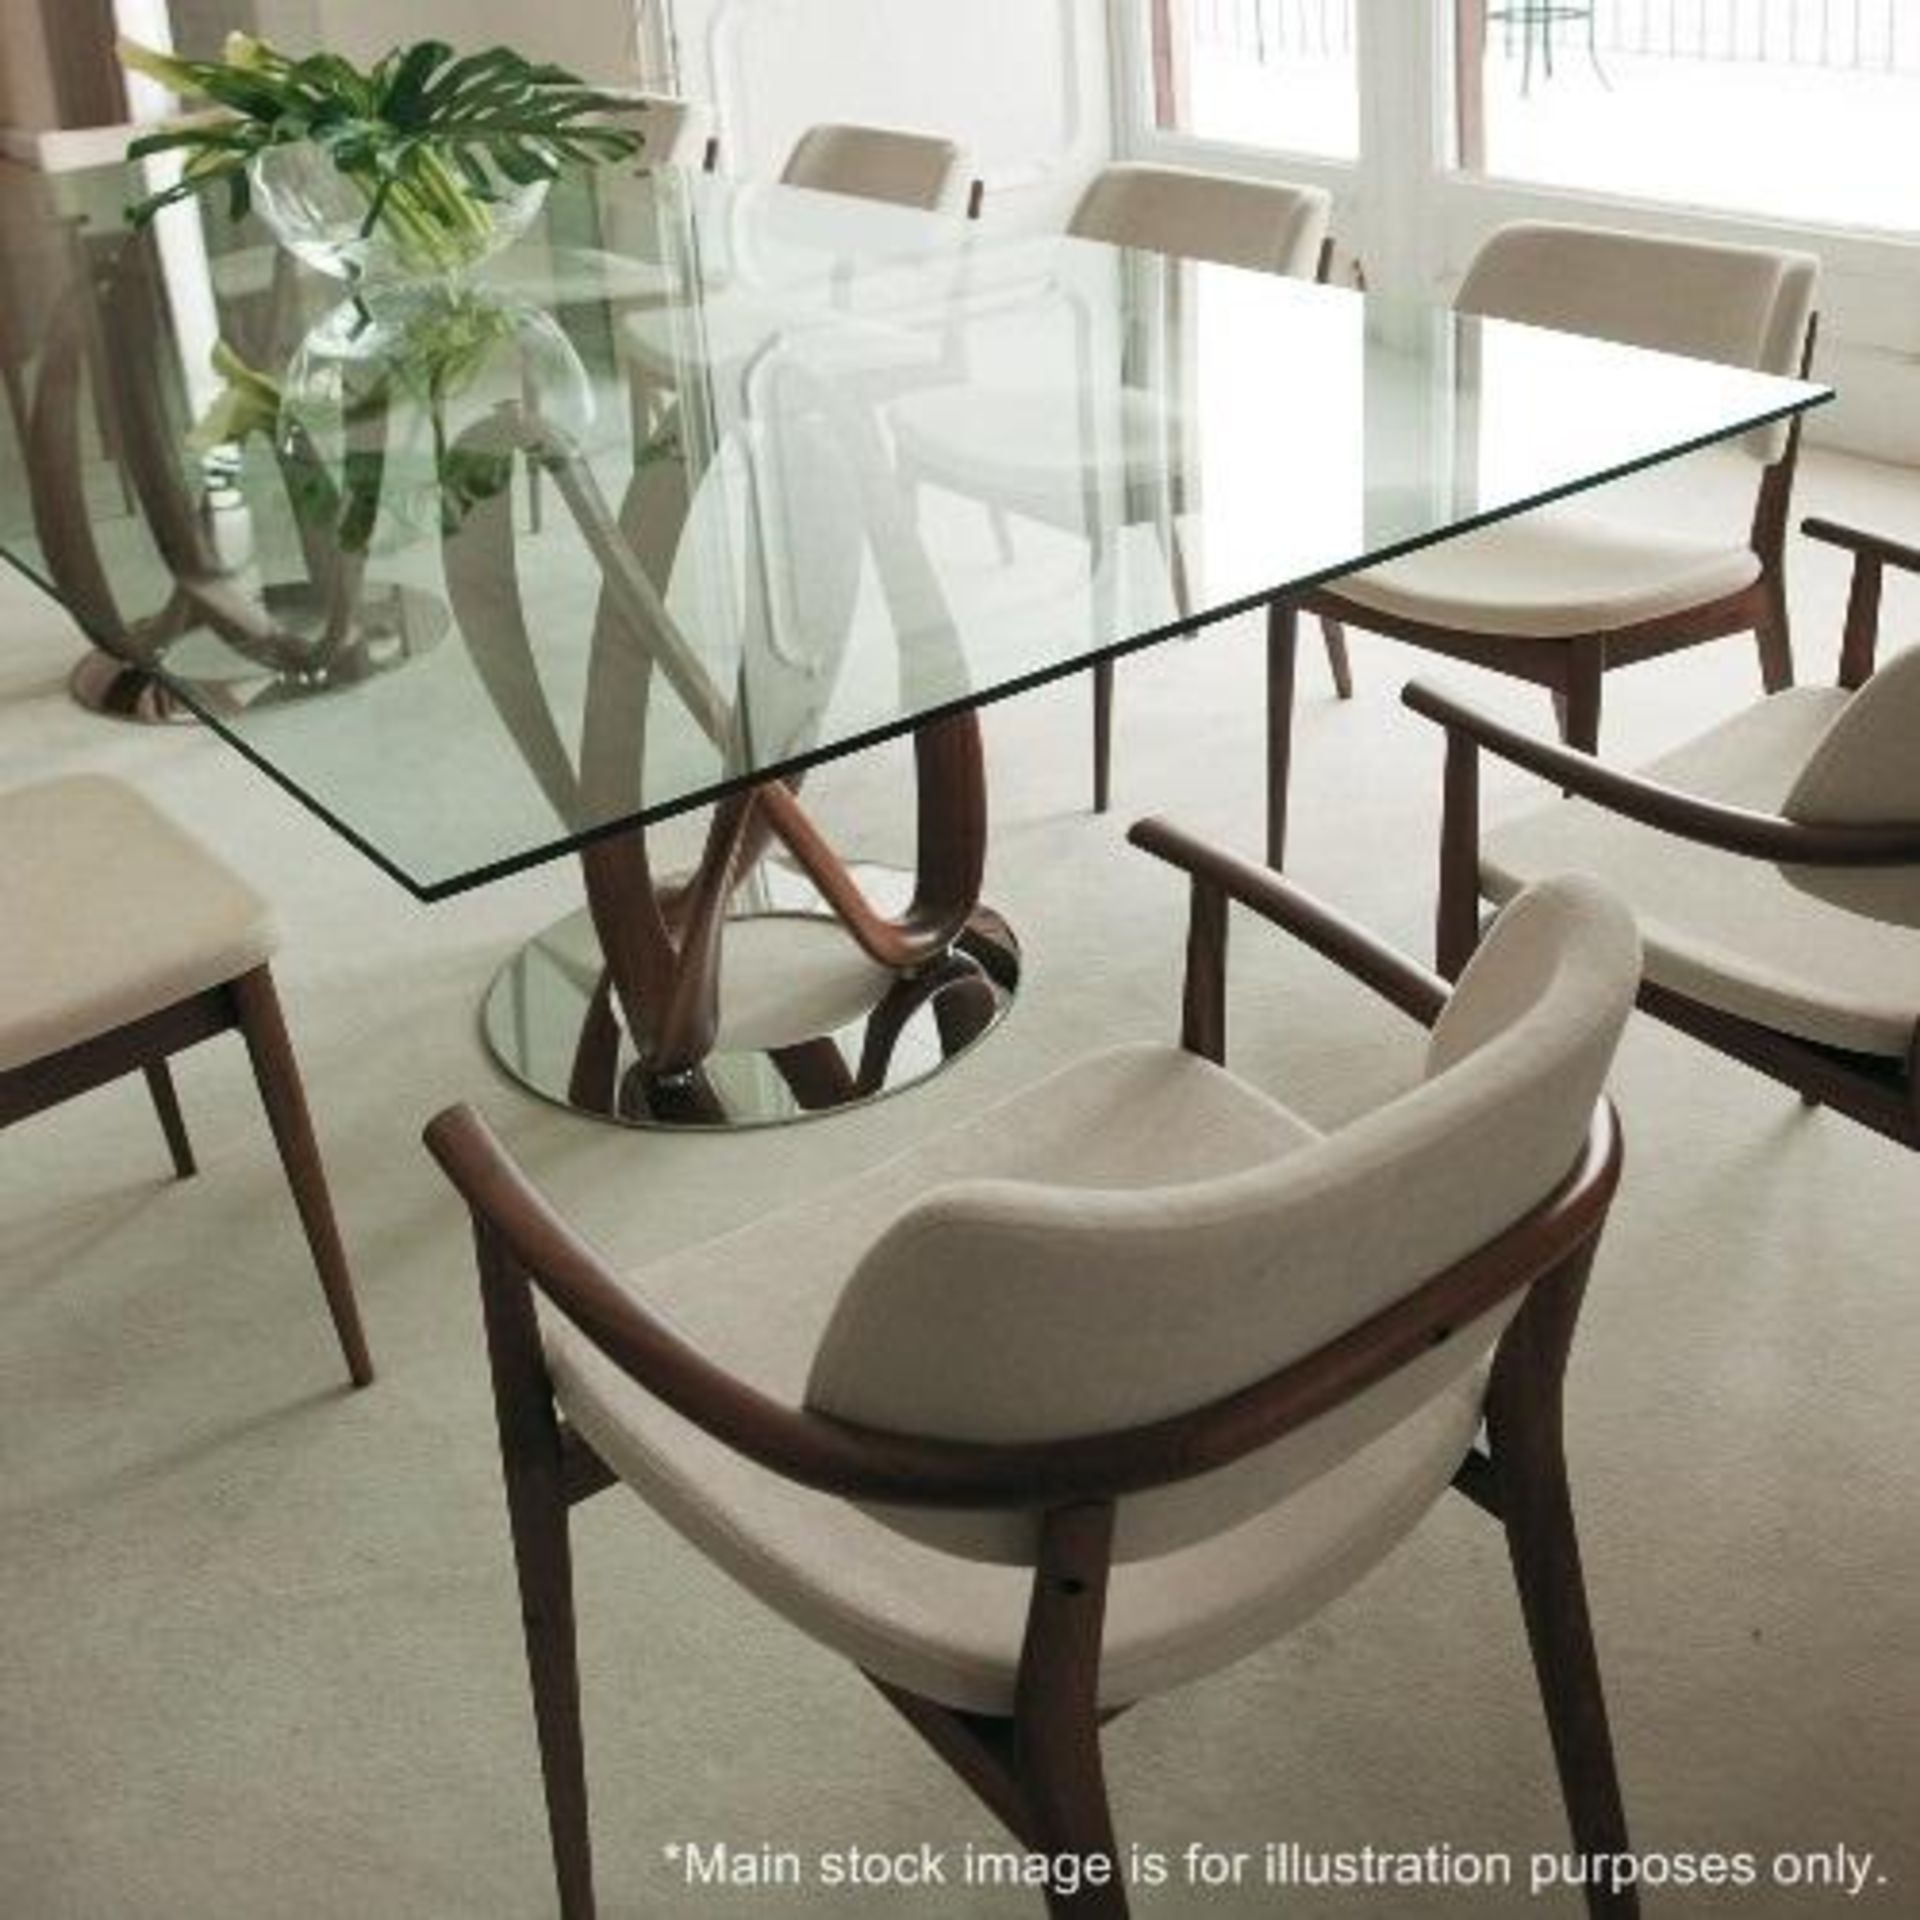 1 x PORADA 'Infinity' Italian Designer Rectangular Glass Topped Dining Table With Distinctive Bases